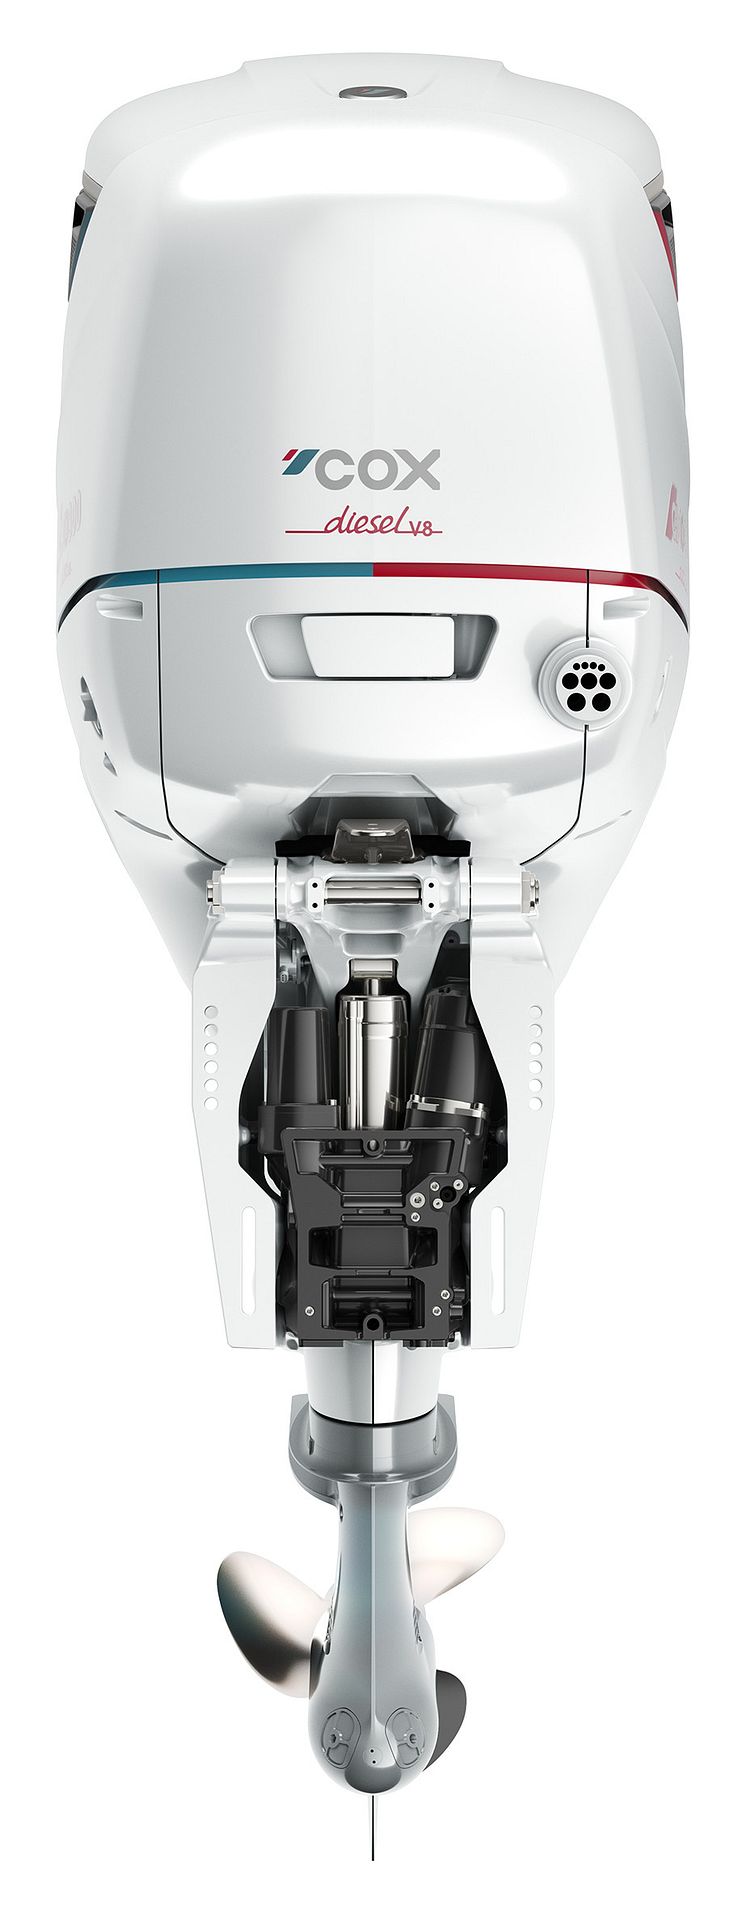 High res image - Cox Powertrain - CXO300 final production render